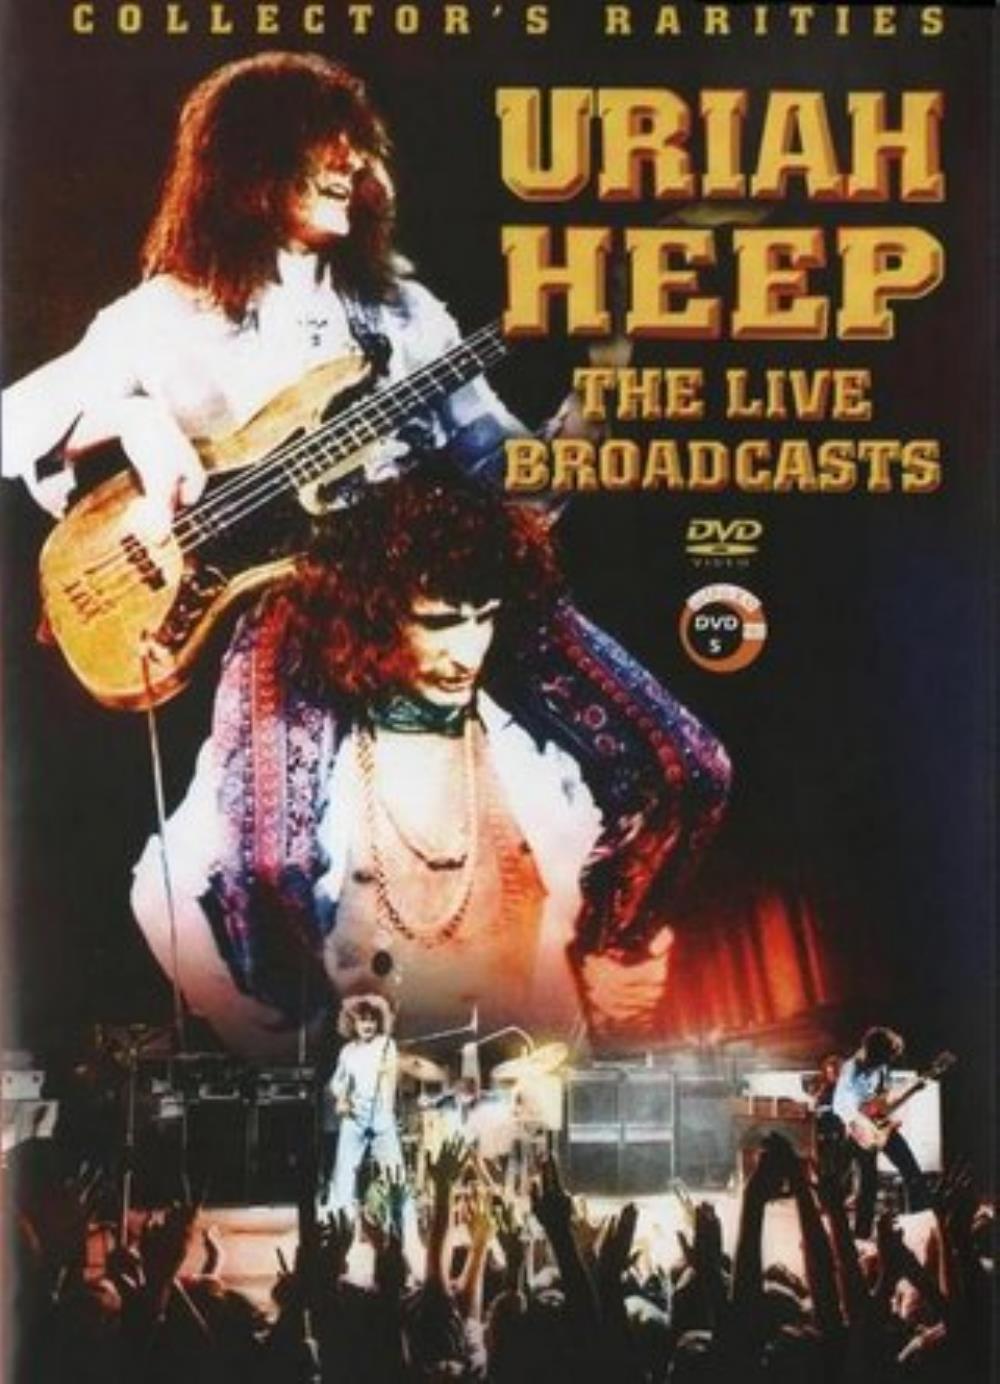 Uriah Heep The Live Broadcasts album cover